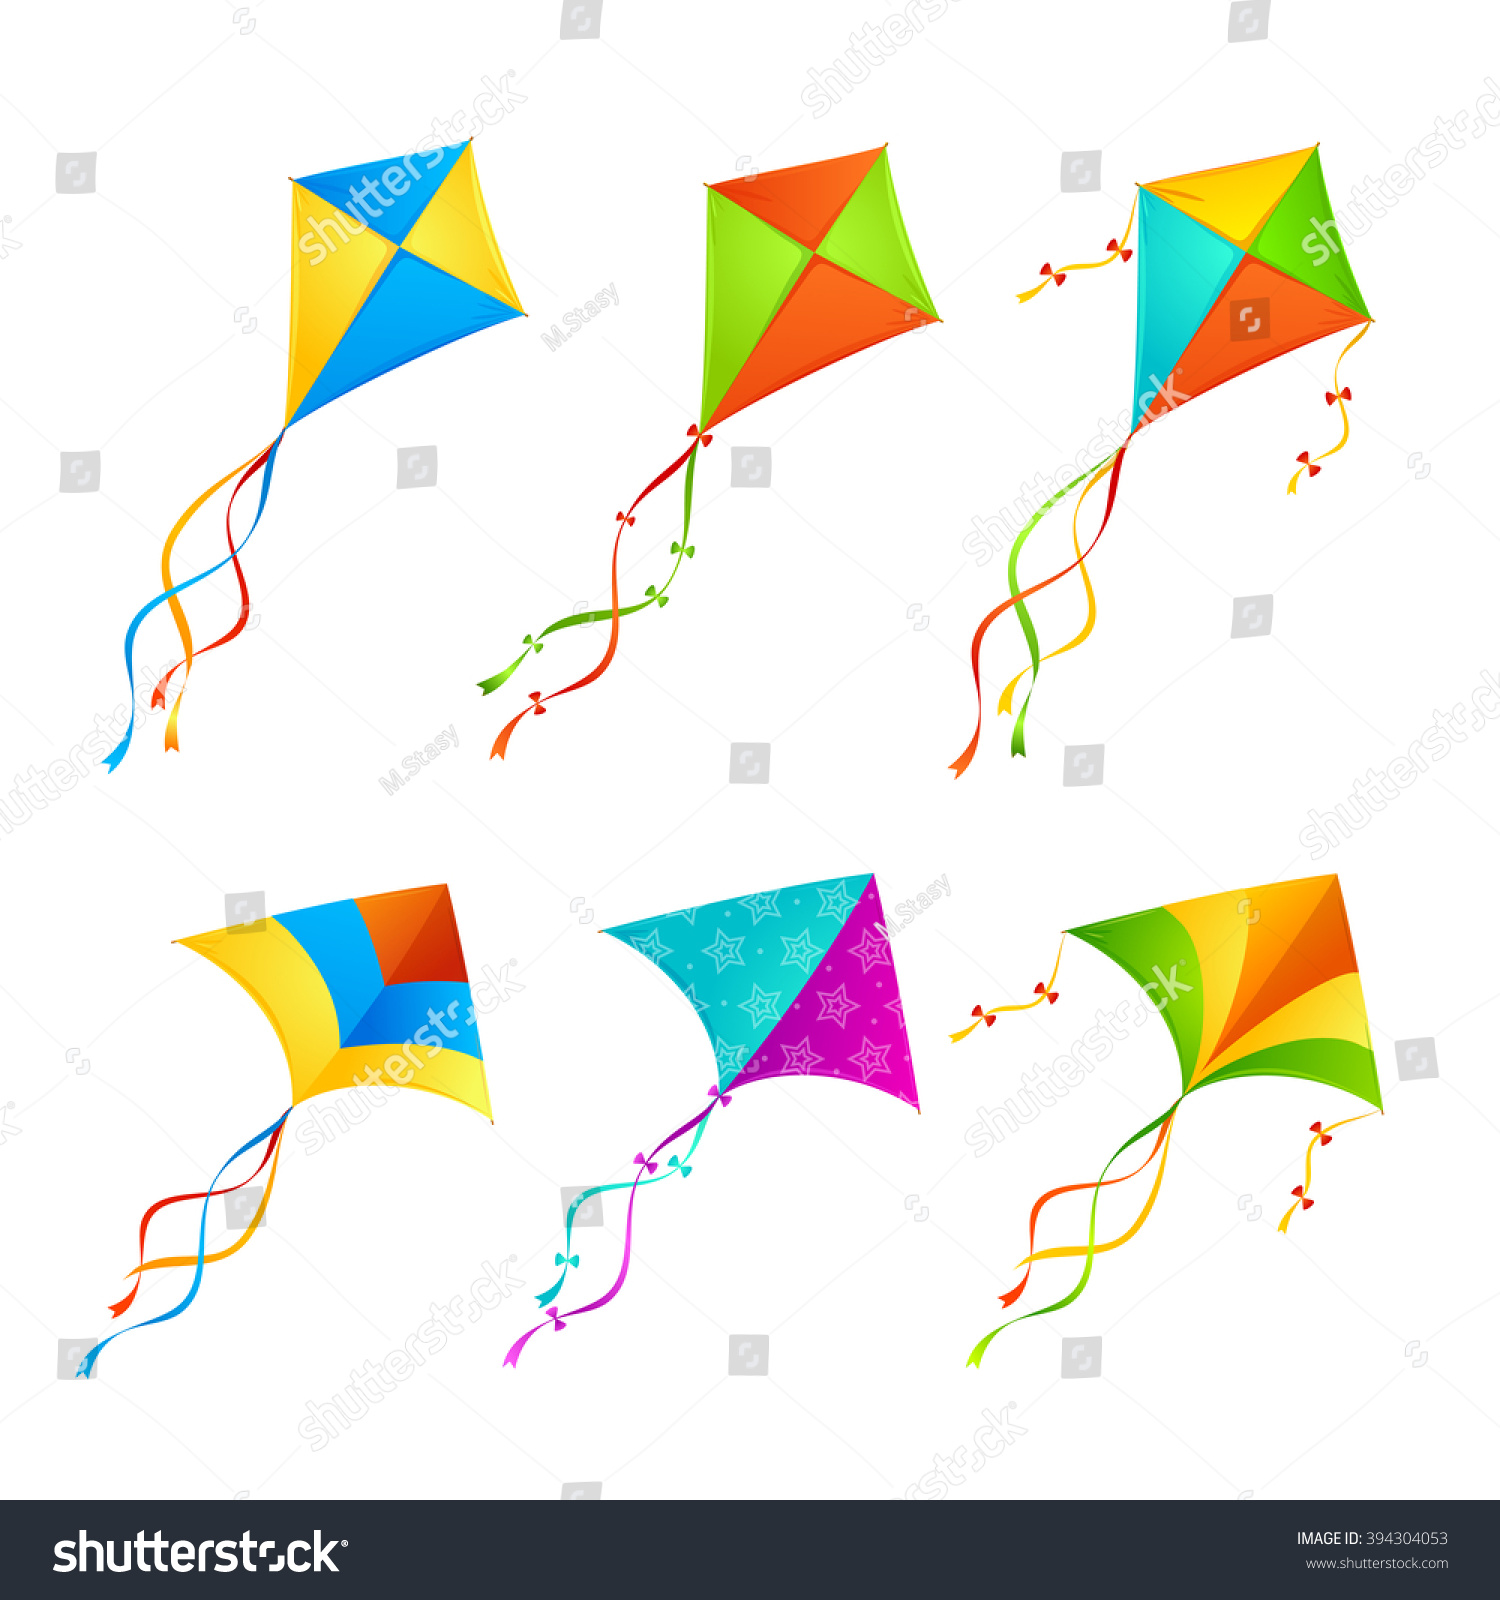 SVG of Colorful Kite Set on White Background. Vector illustration svg